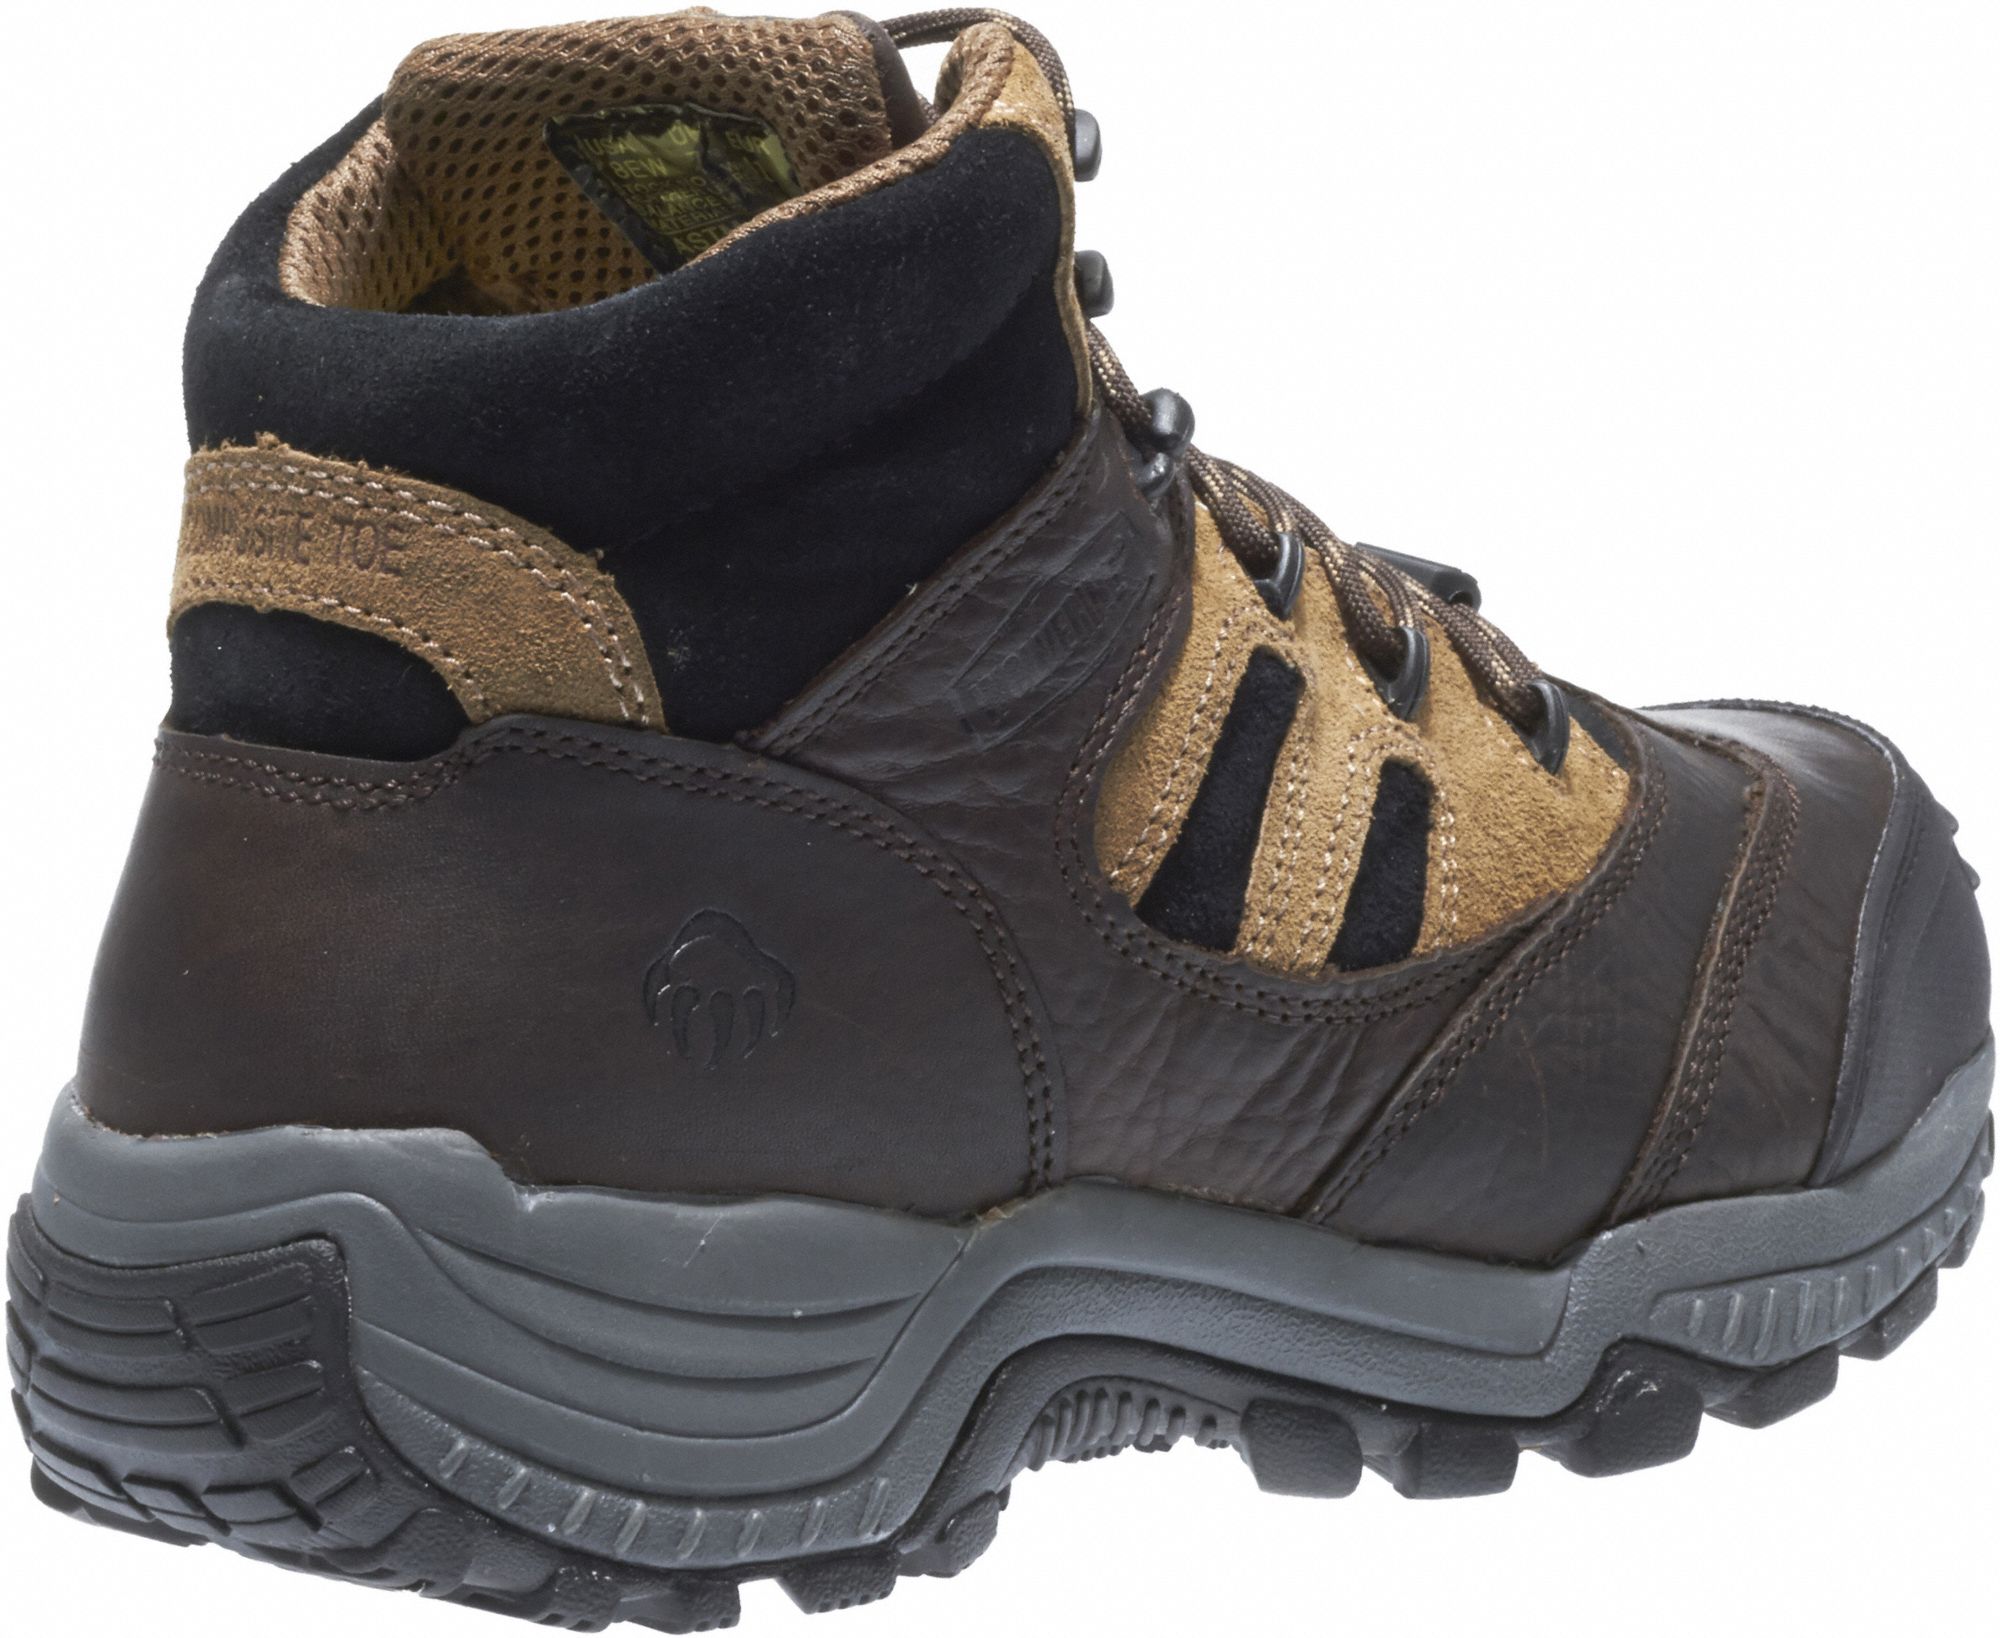 WOLVERINE Hiker Boot, 12, EW, Men's, Brown/Black, Composite Toe Type, 1 ...